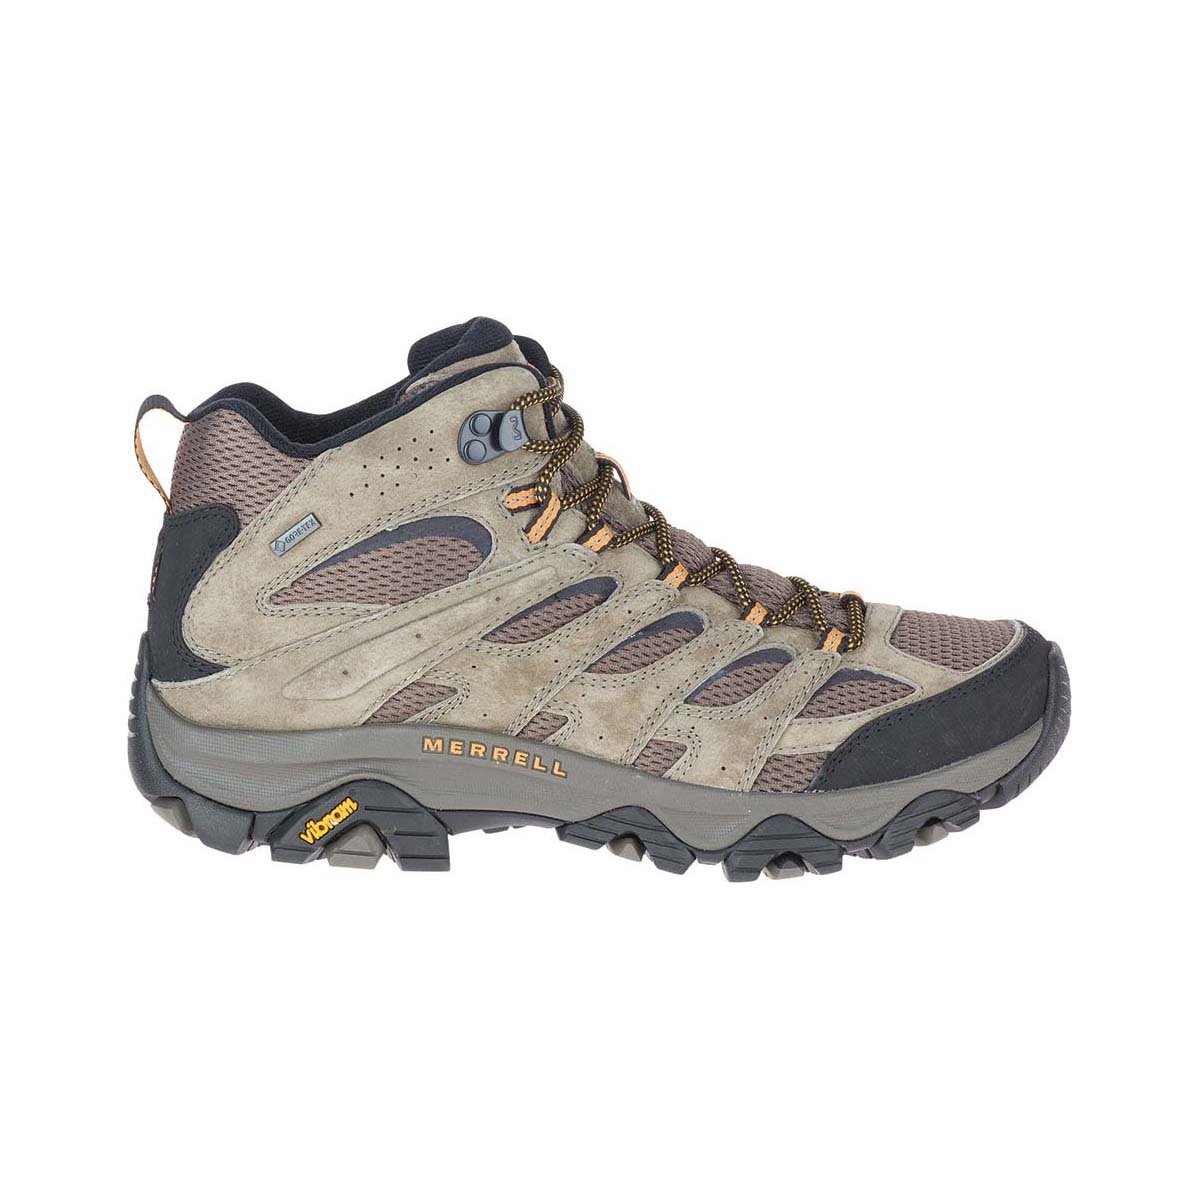 Merrell Men's Moab Mid GTX Hiking Boots 11.5